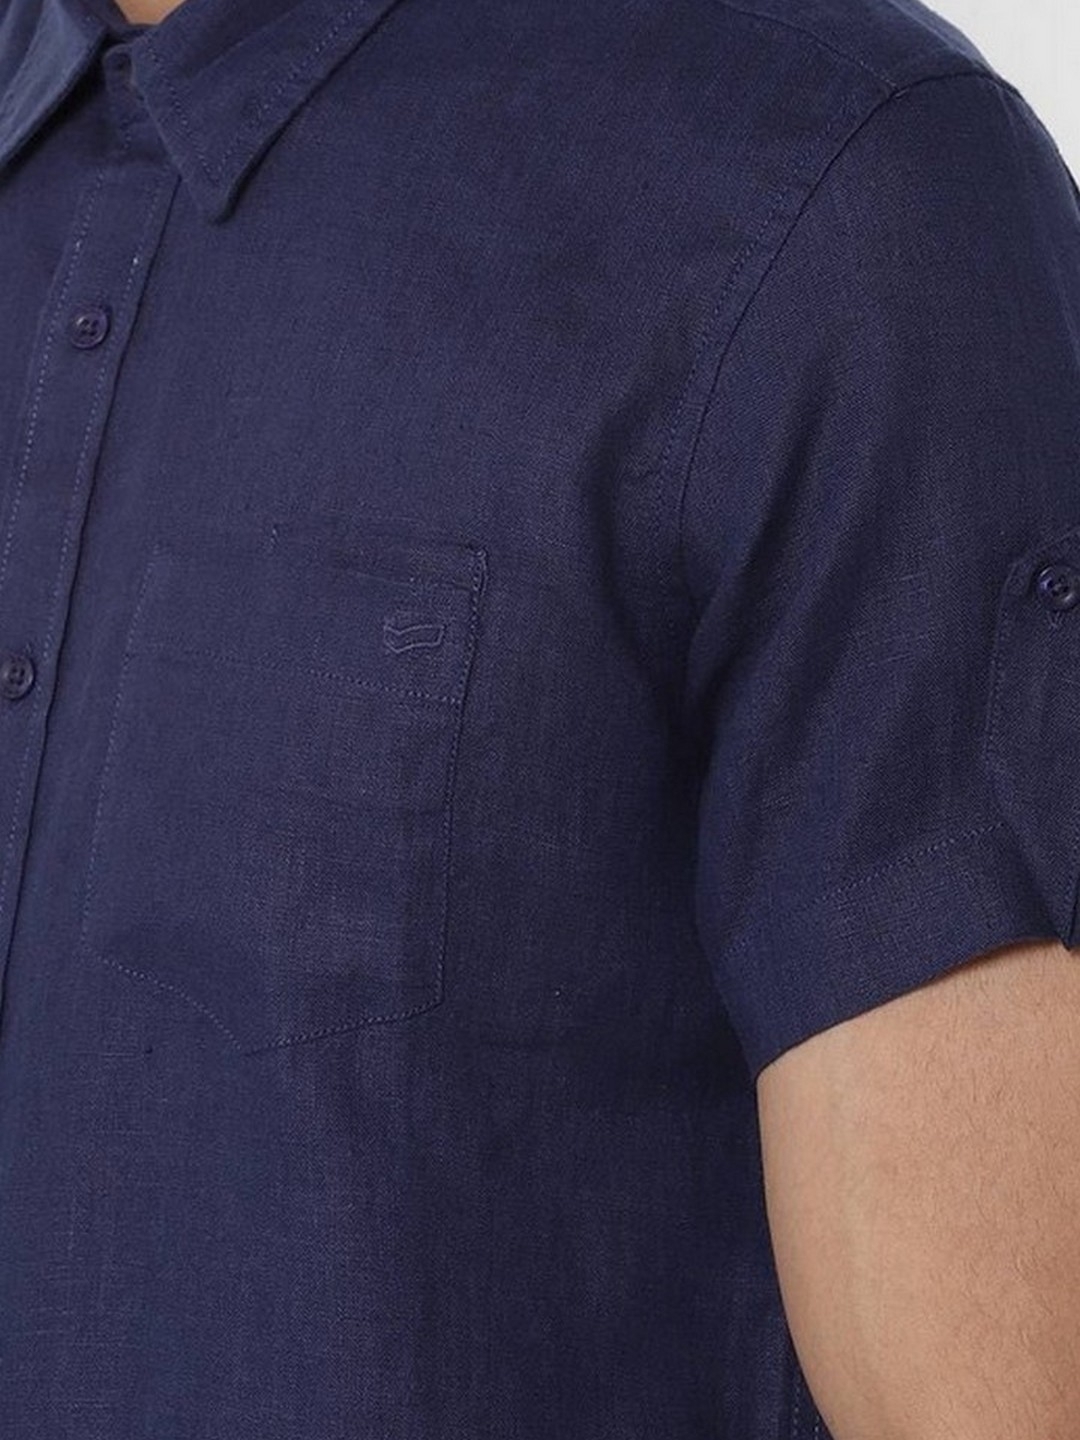 Men's Dab Solid Blue Shirt